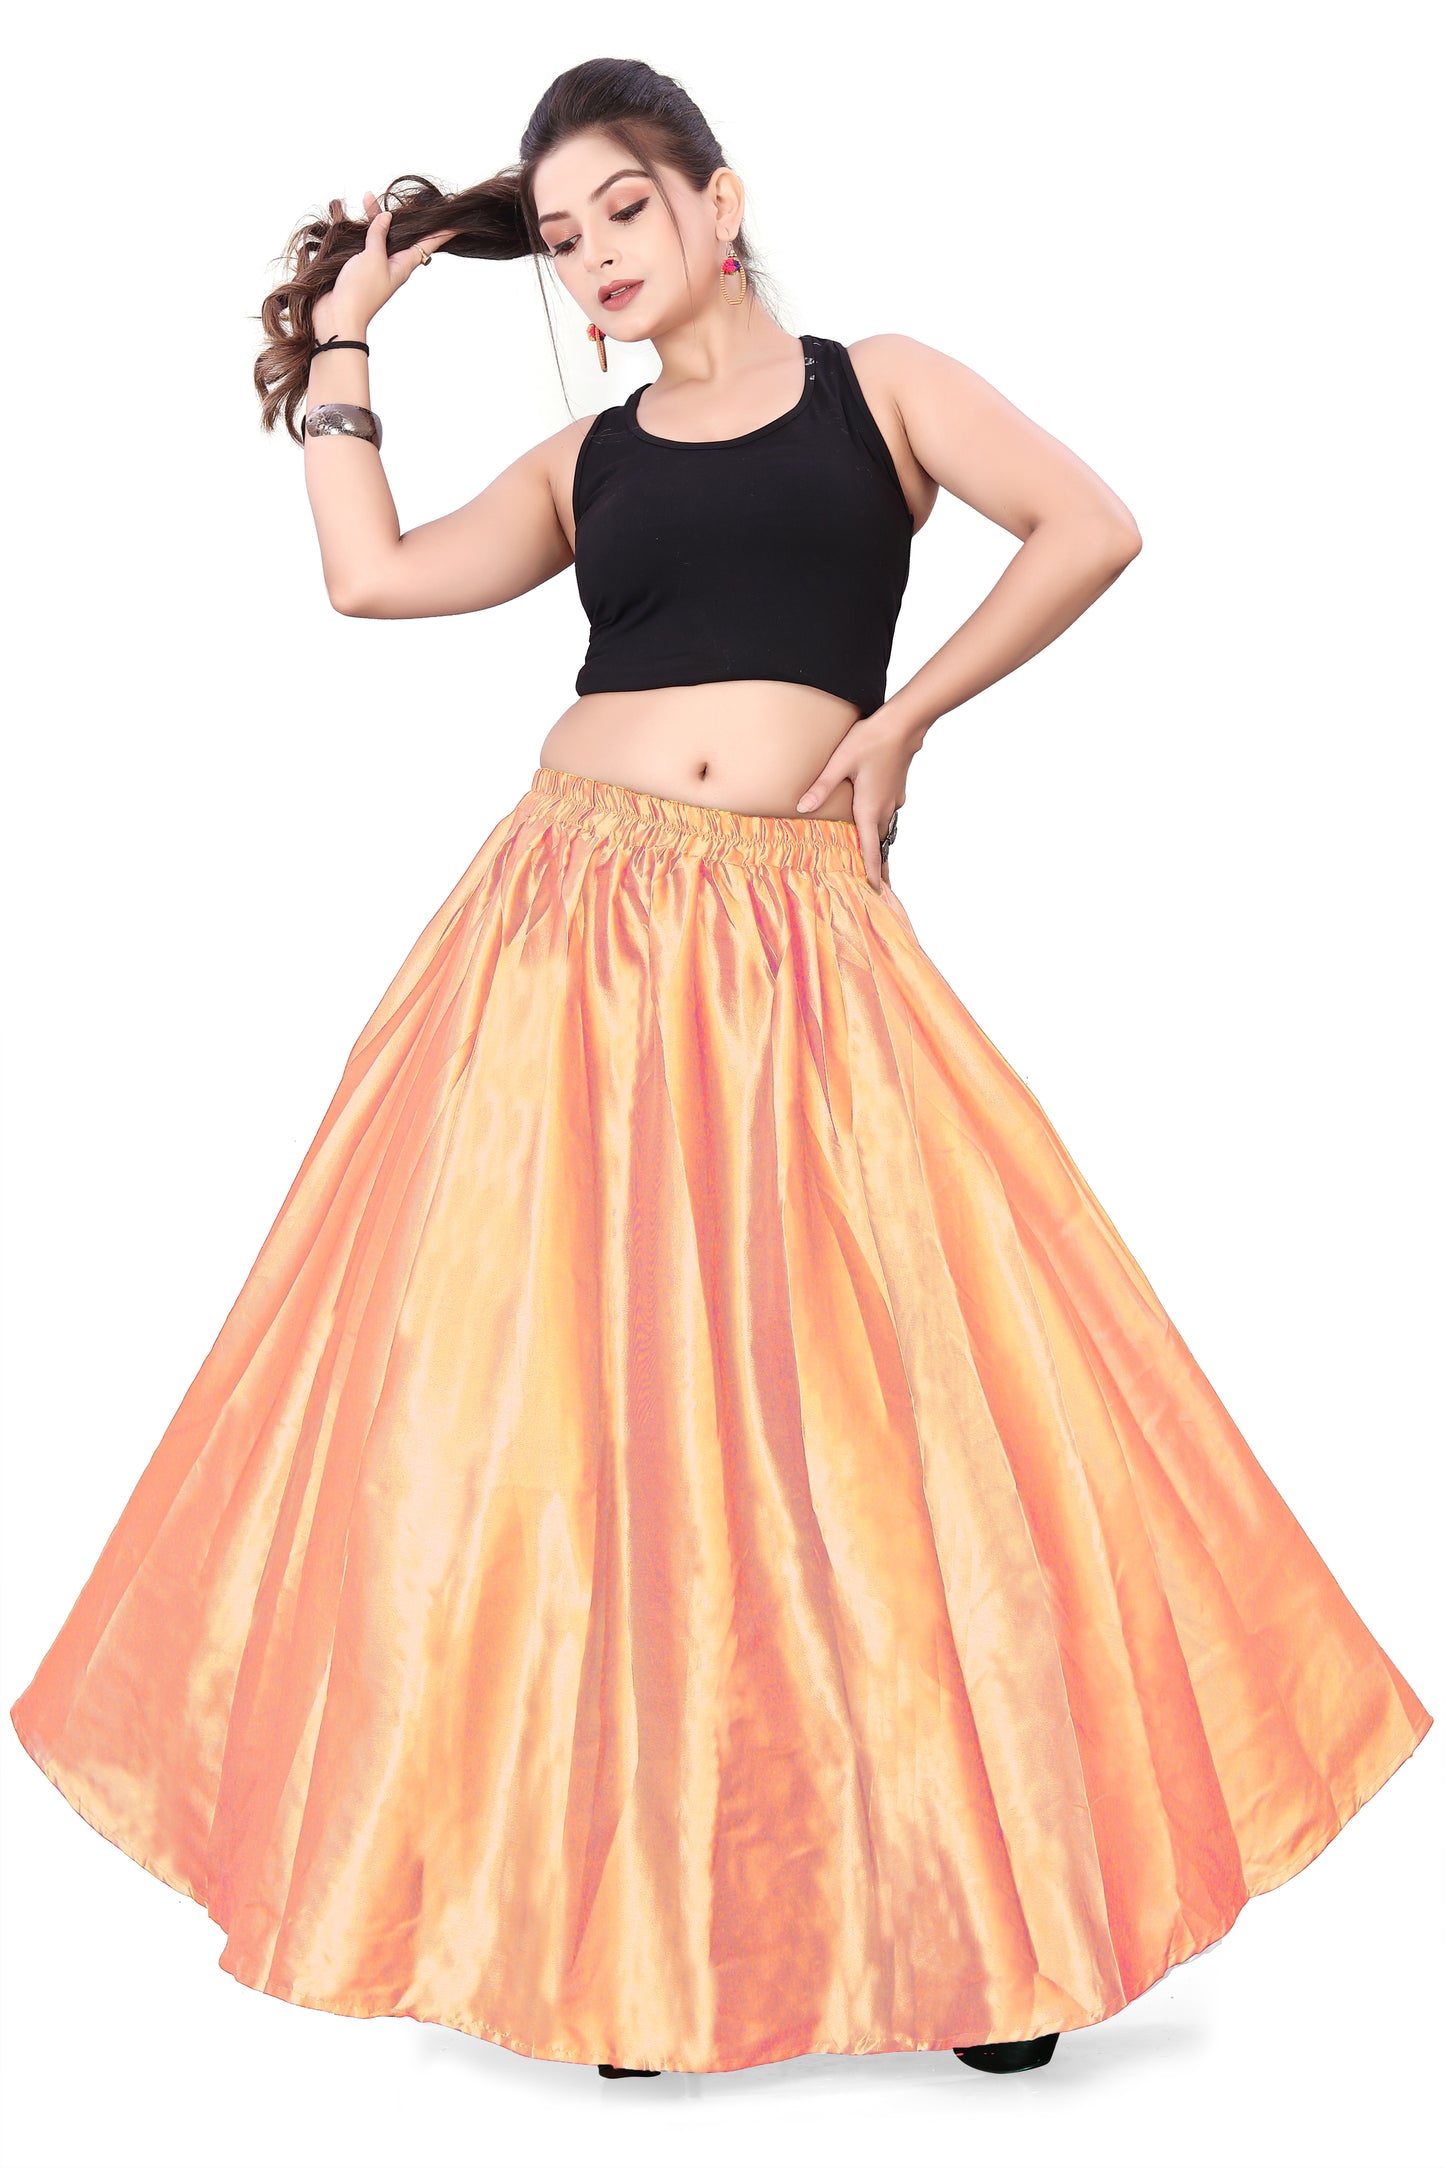 Satin Belly Dance Half Circle Skirt S9-Regular Size 2